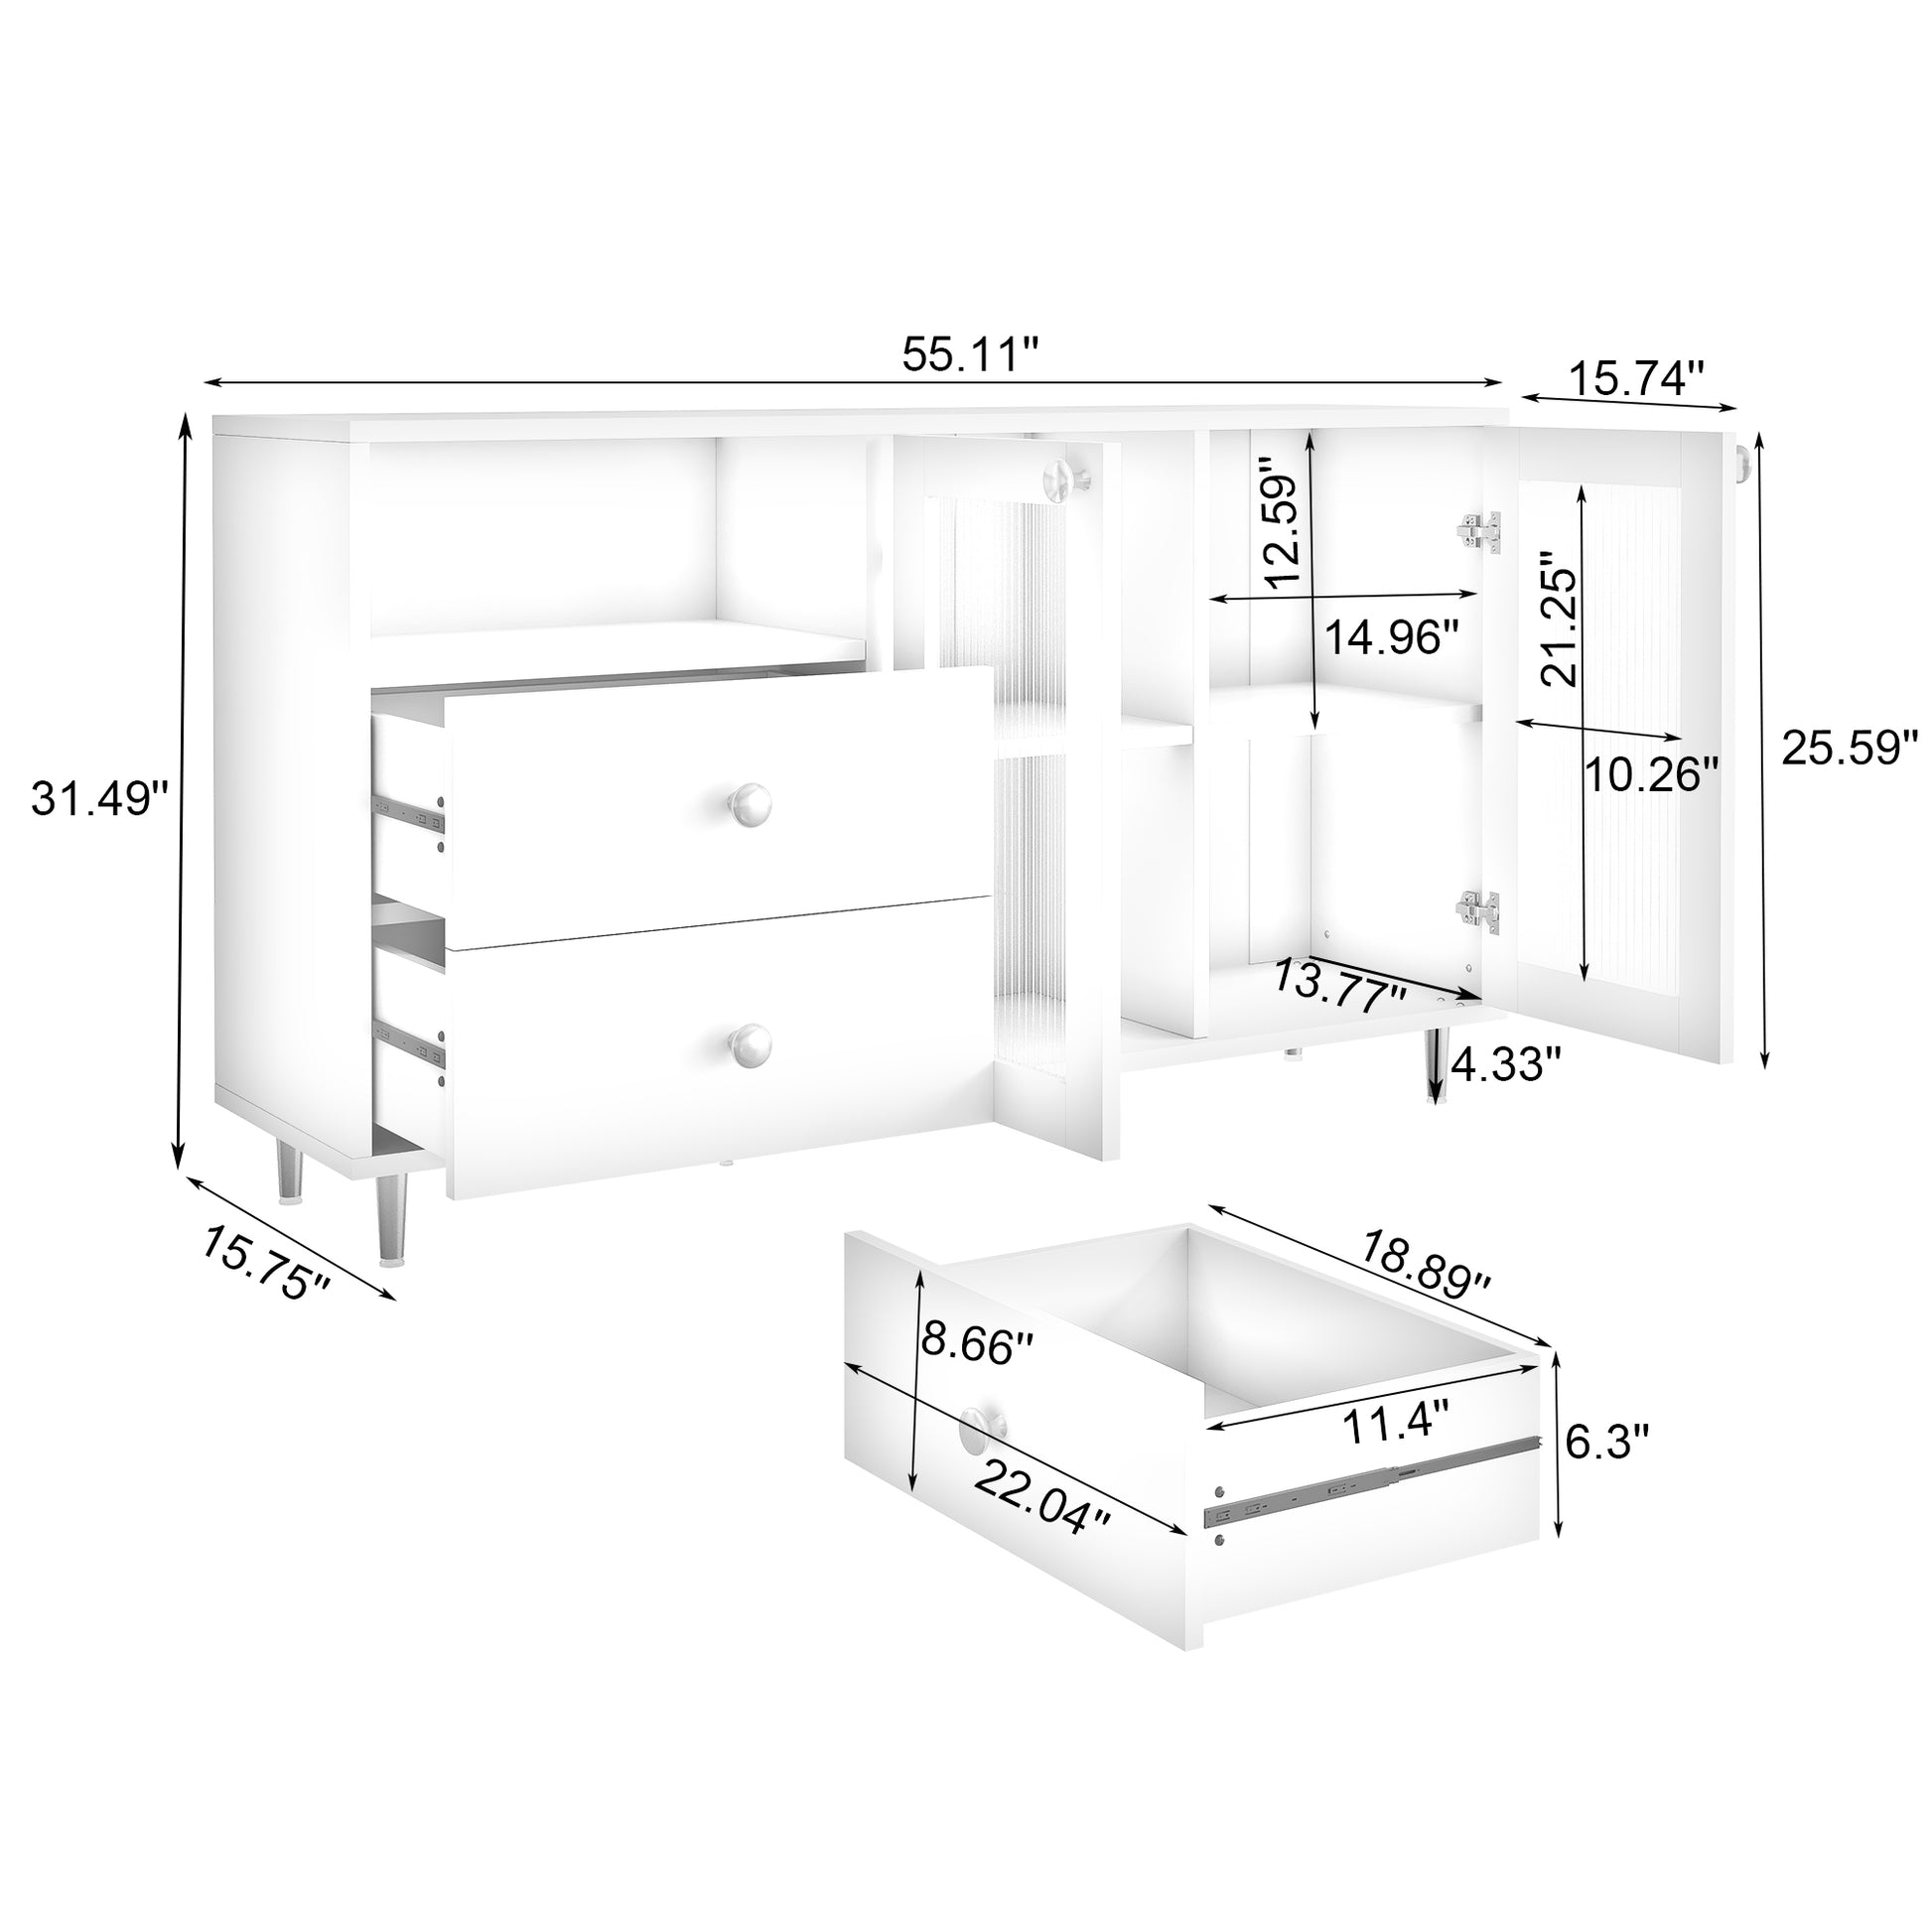 2403Modern Minimalist Side Cabinets, Dining Room